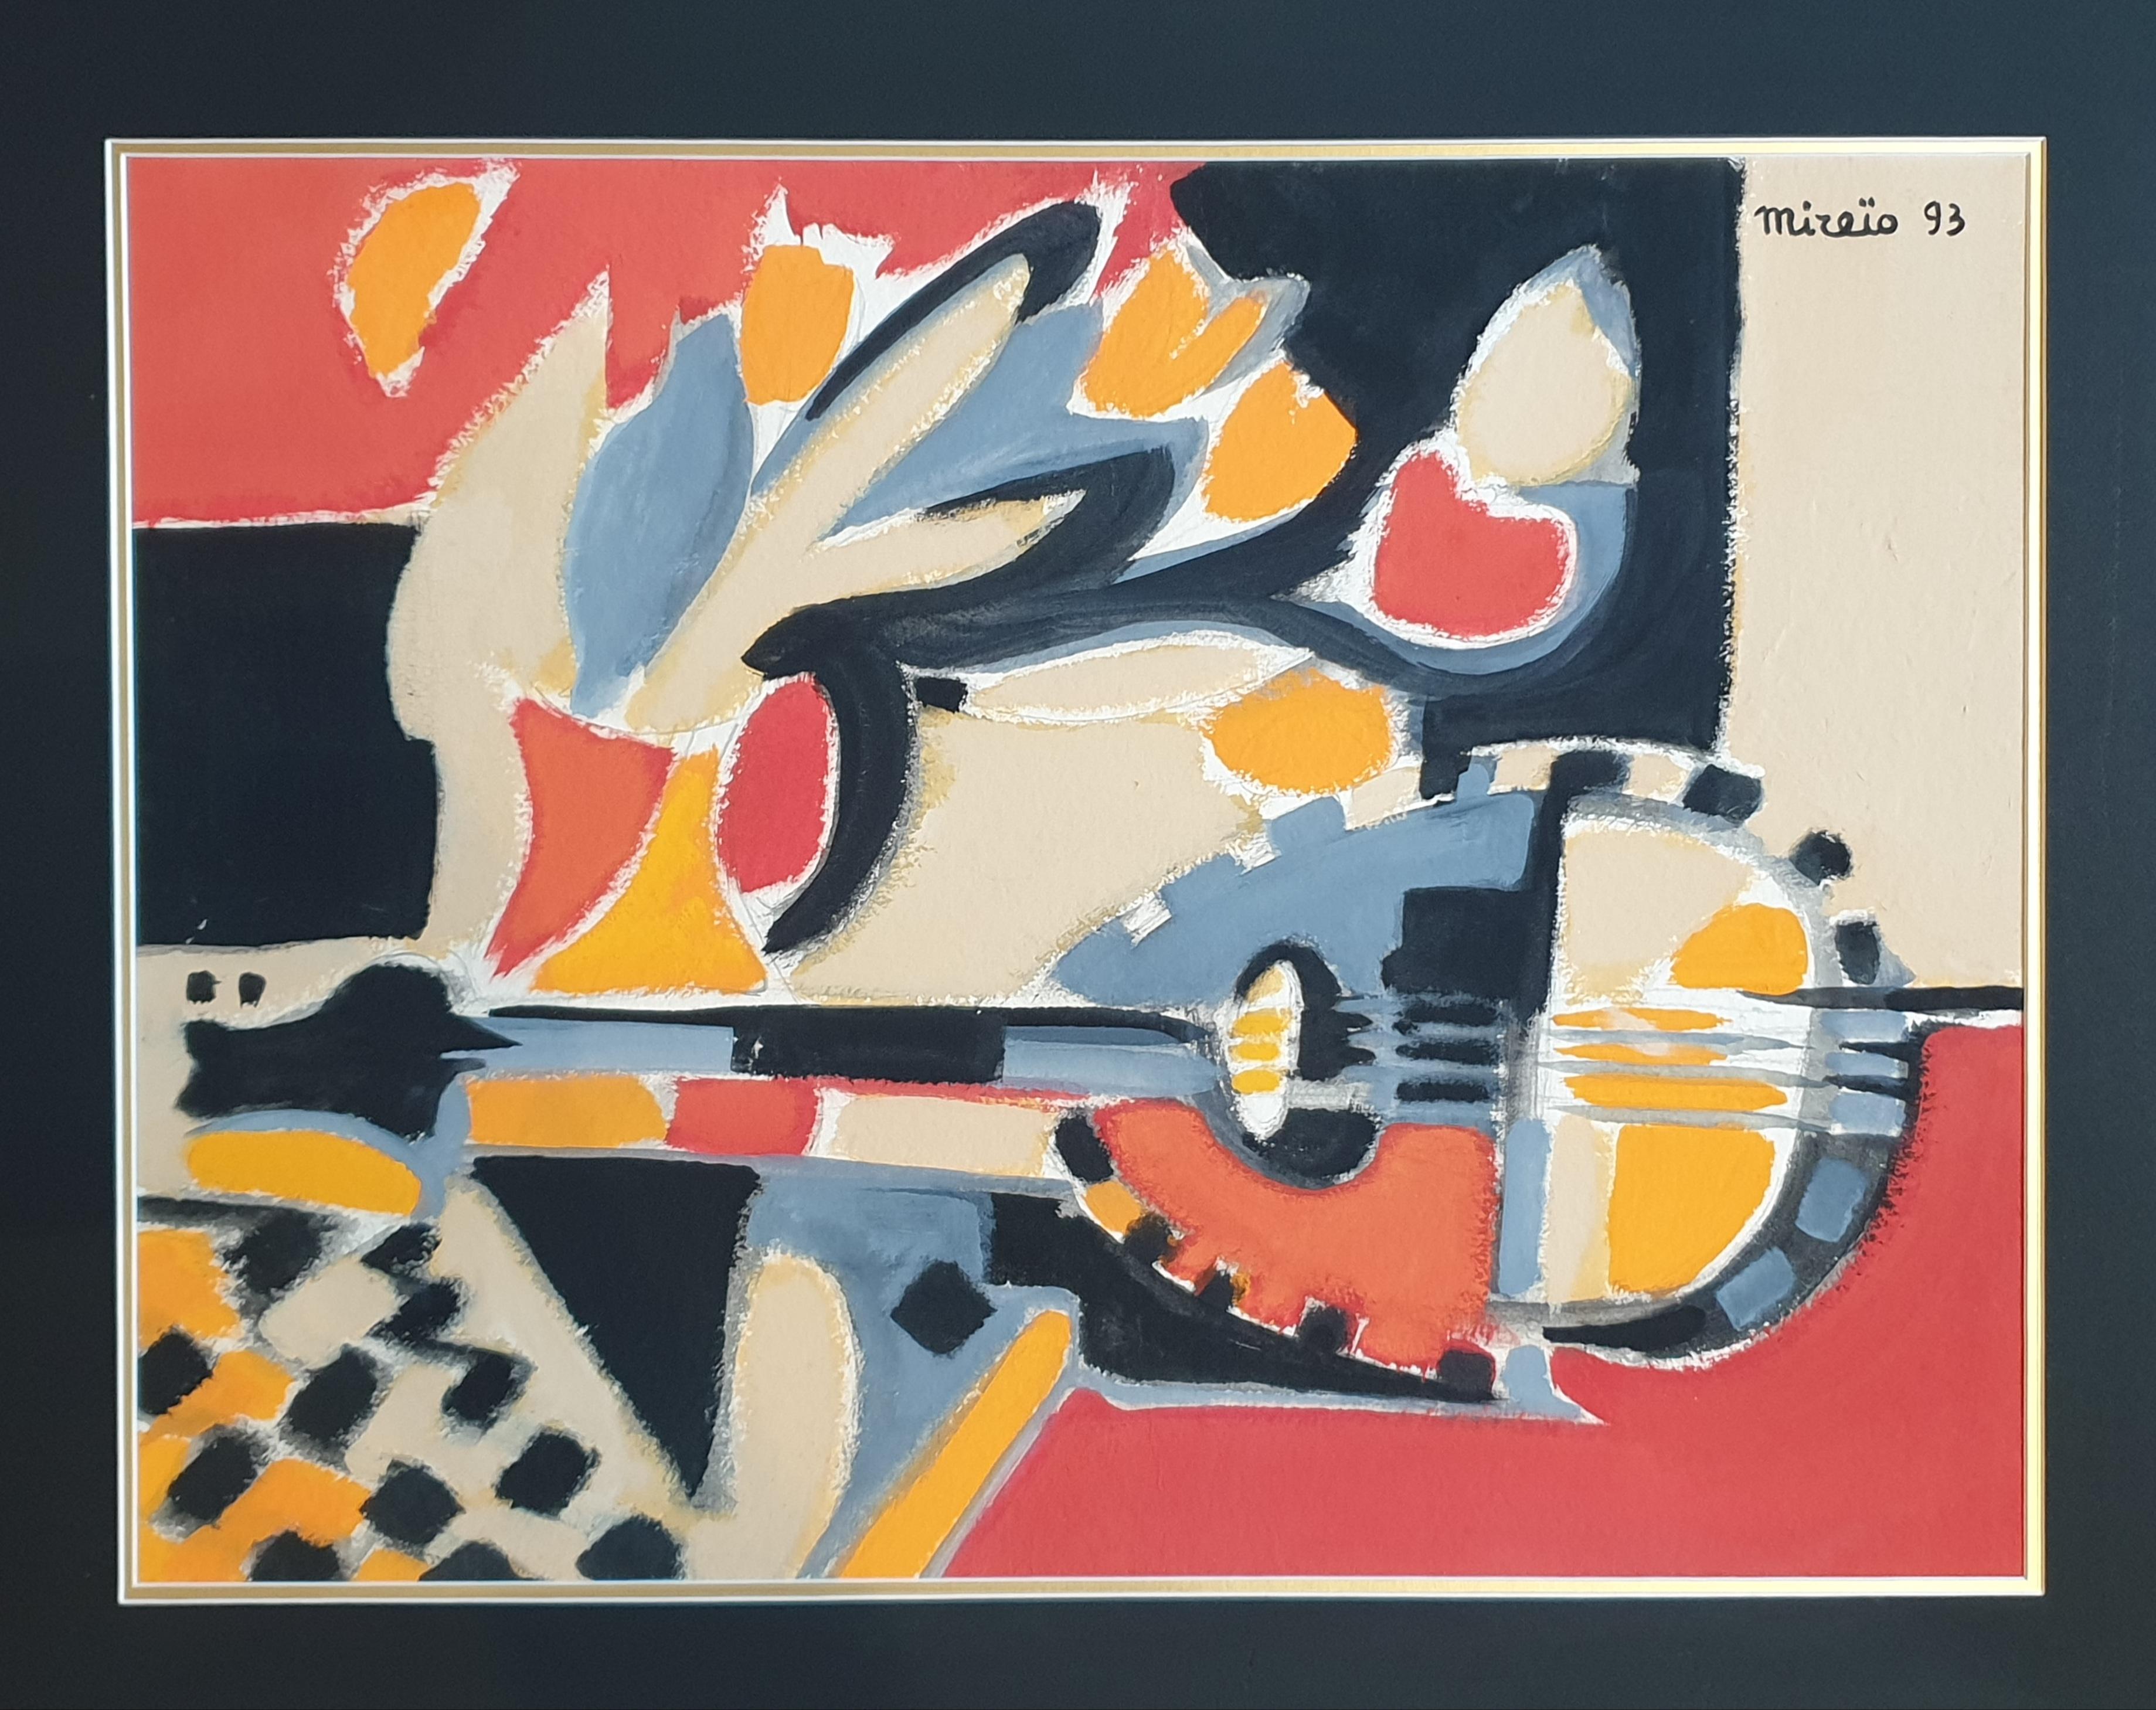 'Tulipes, Mandoline et Echiquier', French Synthetic Late Cubist Gouache on Paper - Art by Mireïo